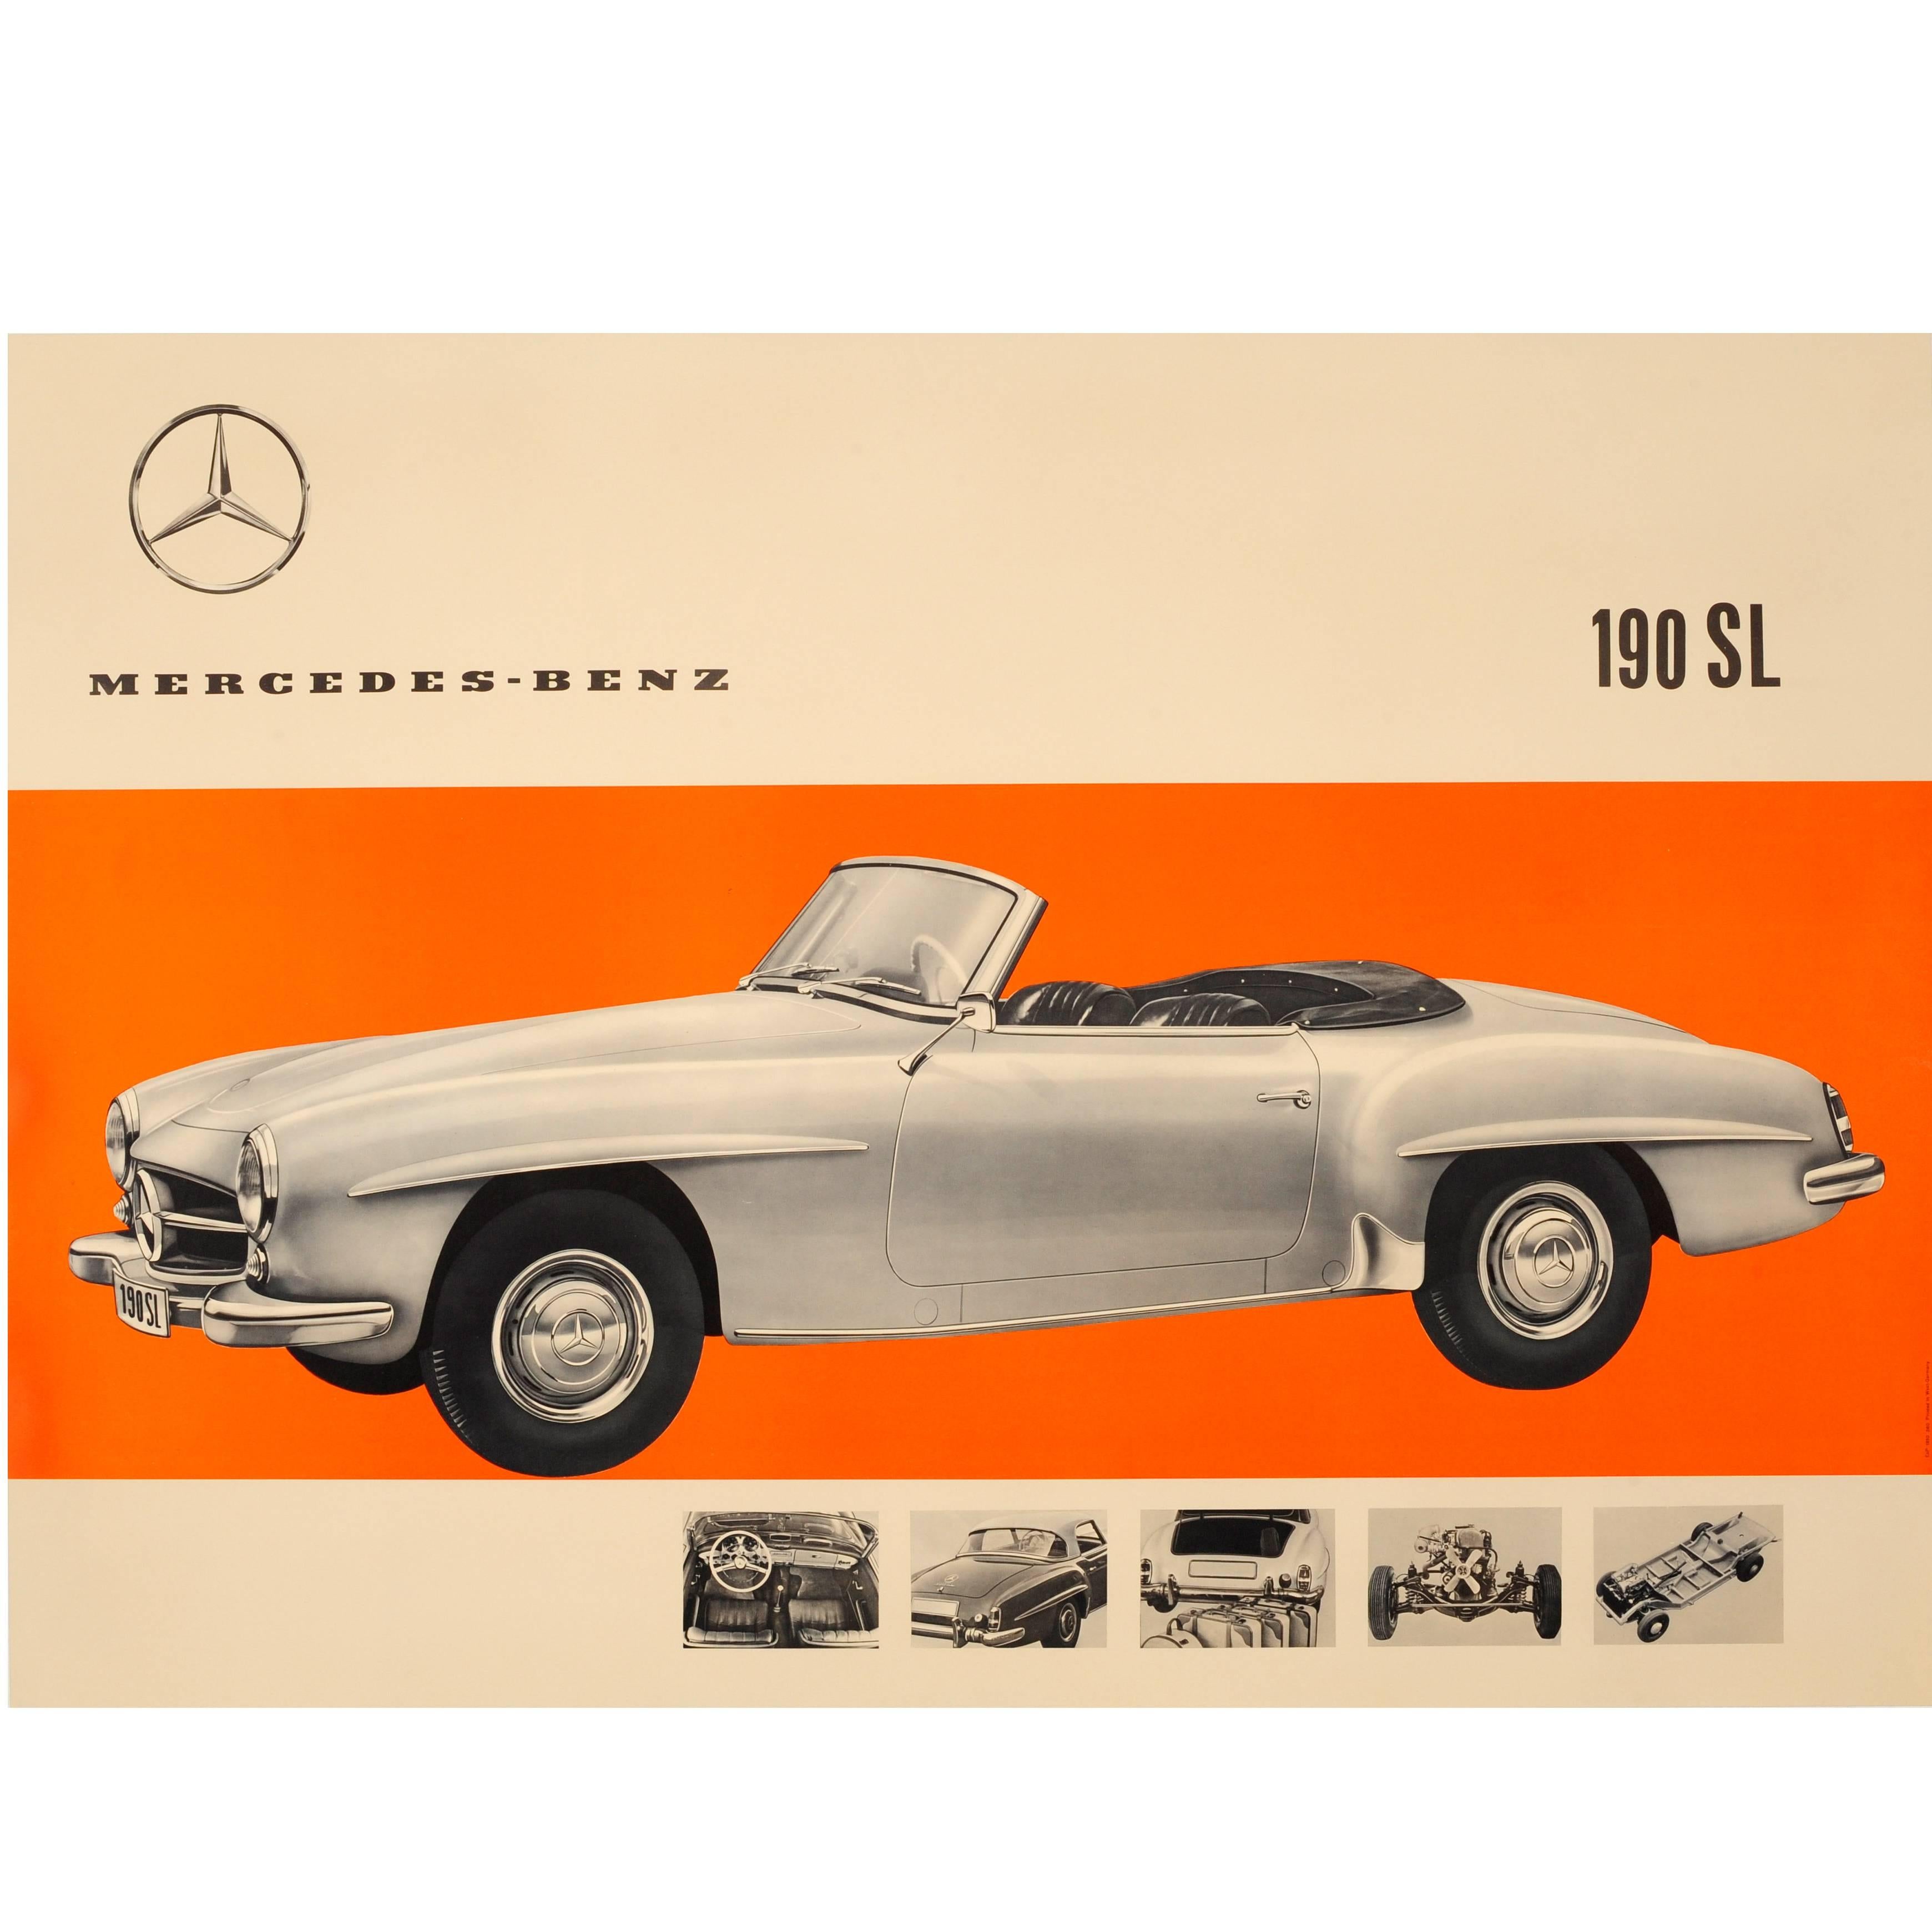 Original Vintage Car Advertising Poster for Mercedes Benz 190 SL Luxury Roadster